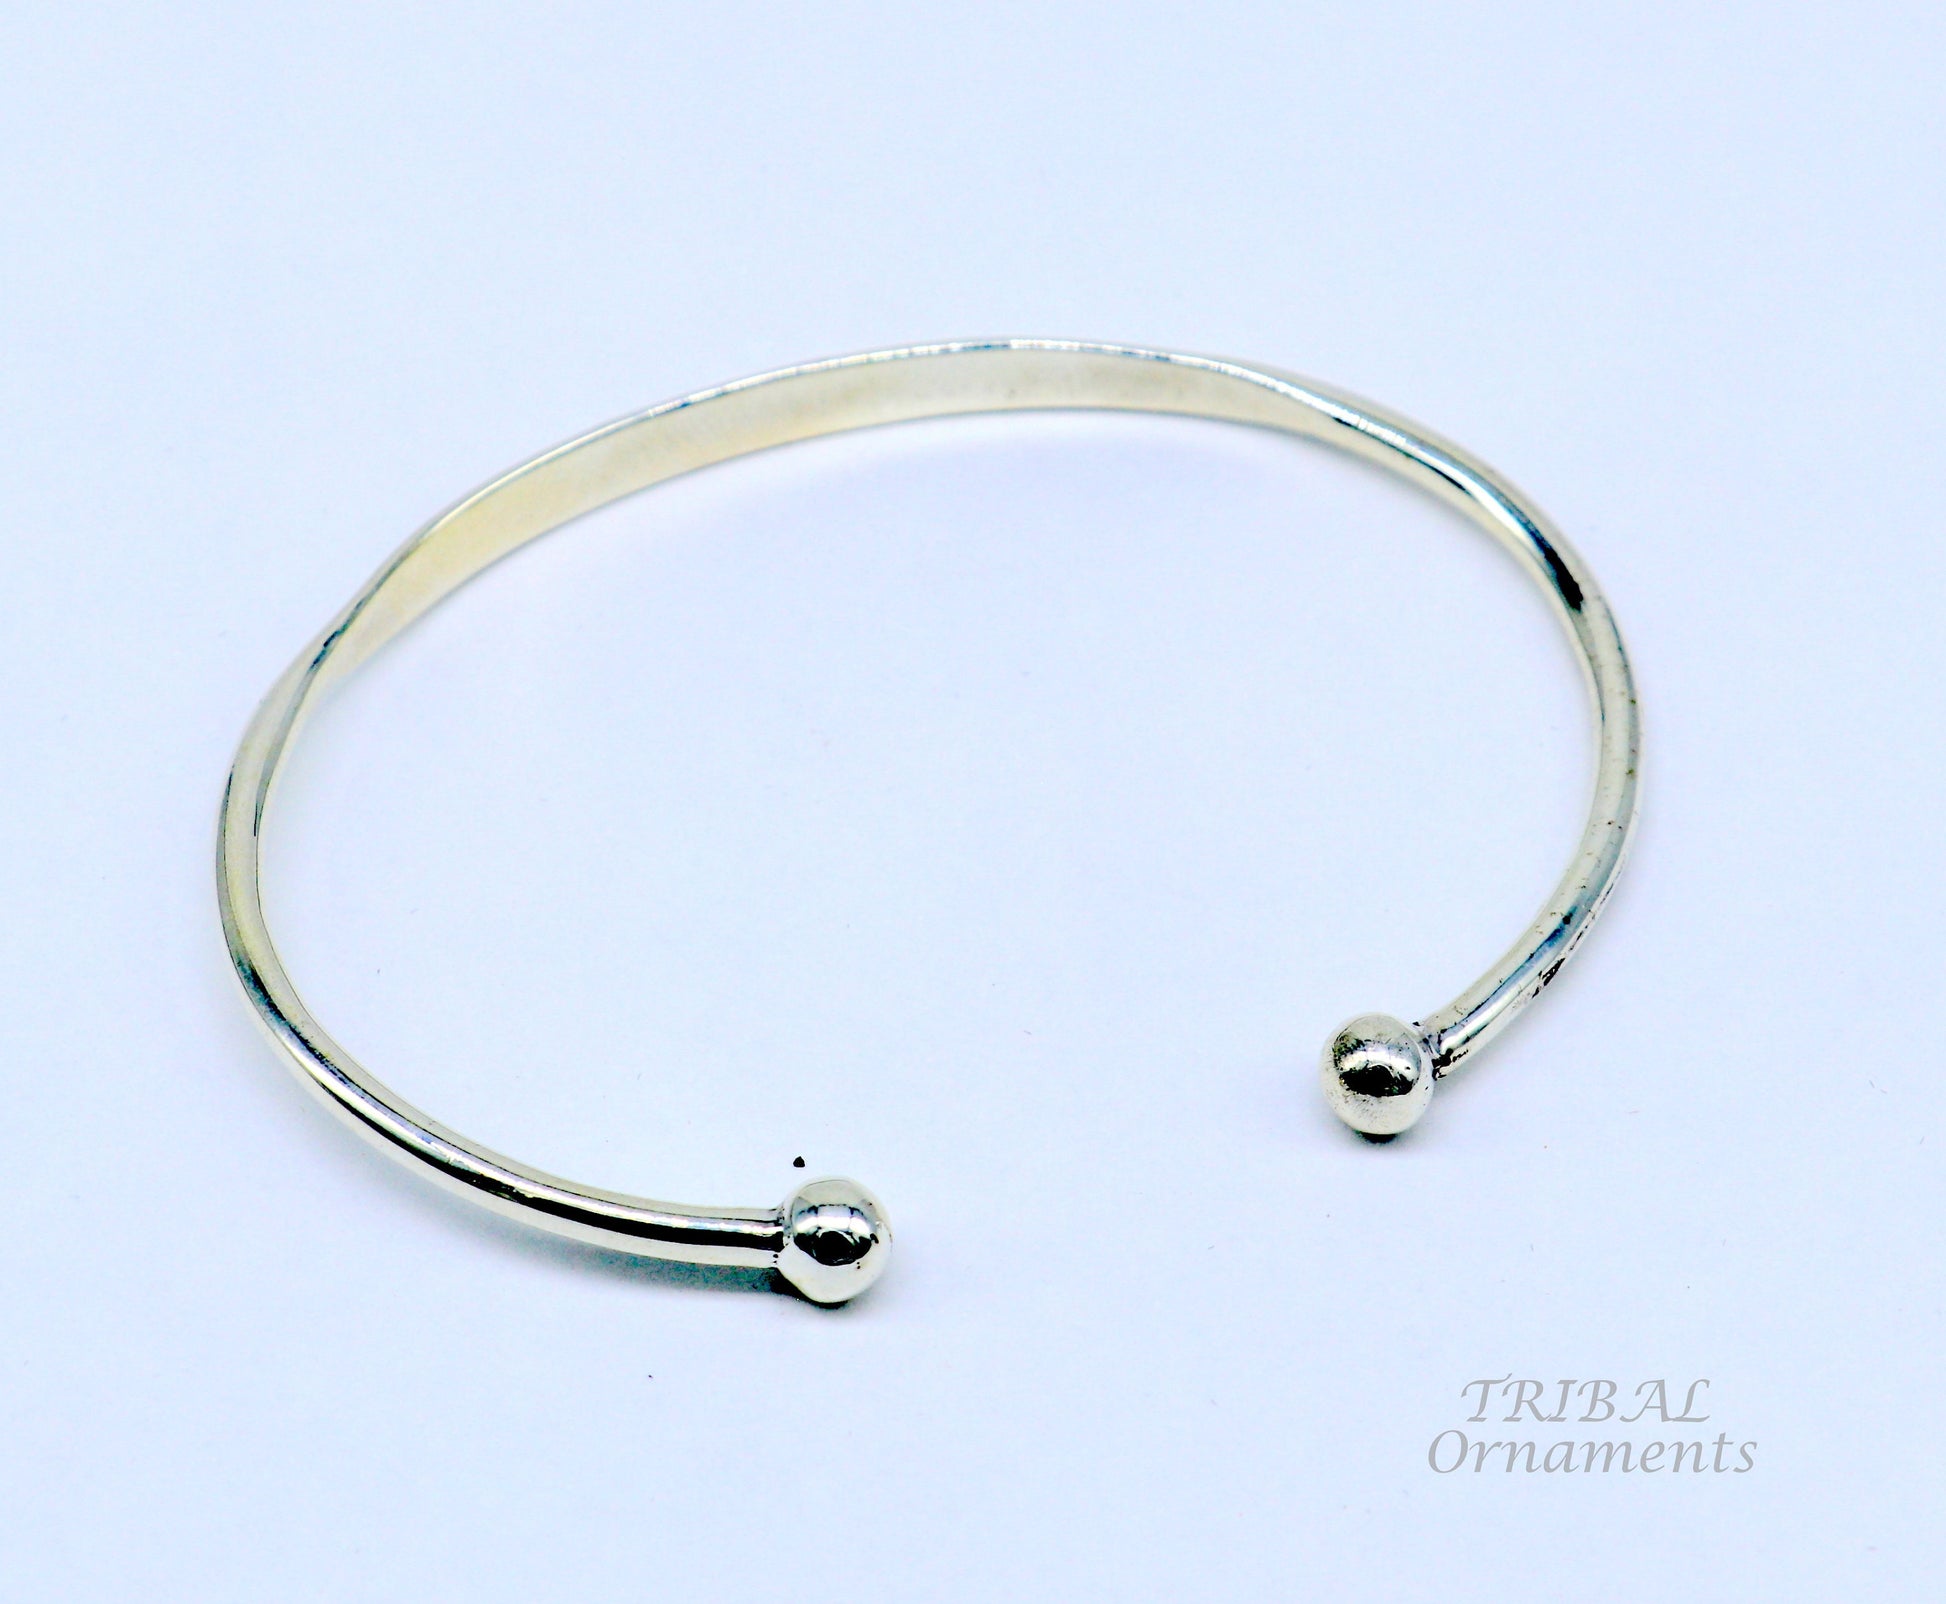 925 sterling silver handmade plain shiny design bangle bracelet cuff kada, excellent gifting plain bracelet stylish gifting kada cuff109 - TRIBAL ORNAMENTS